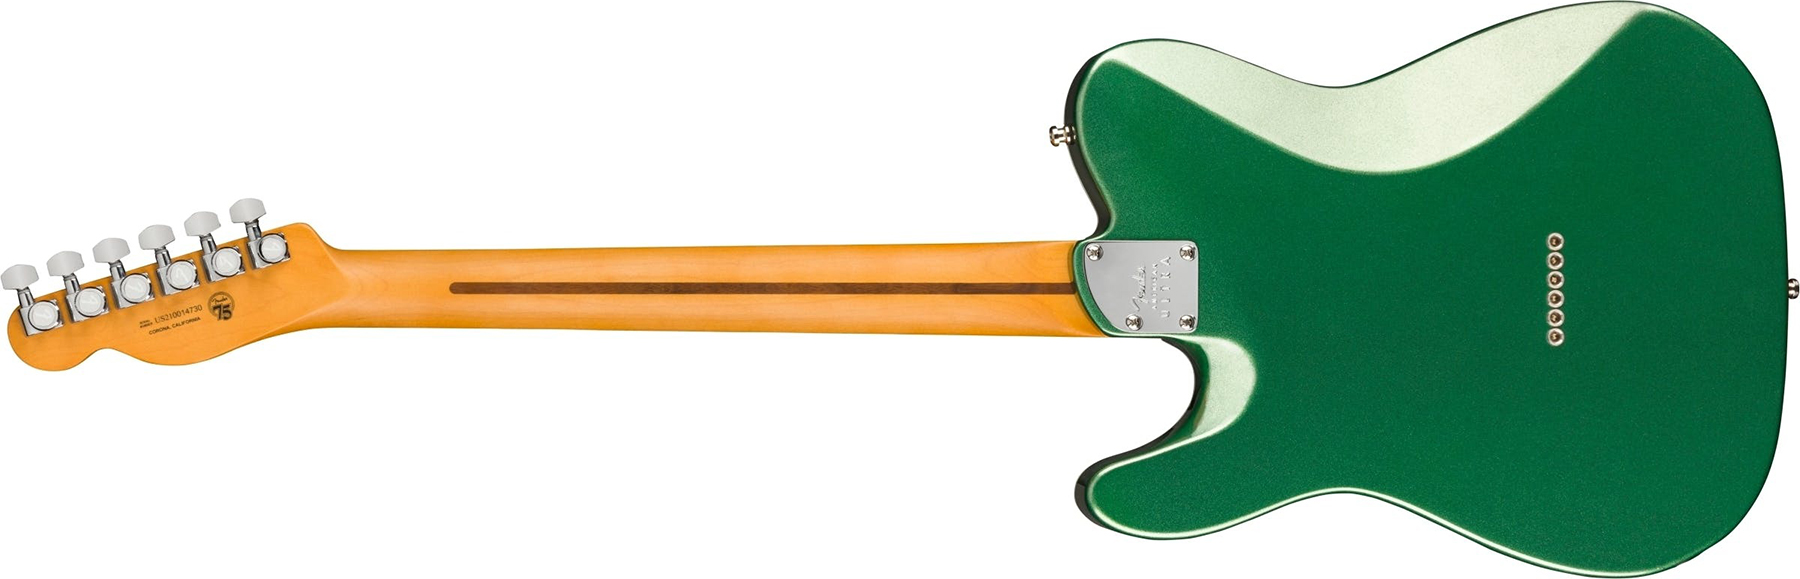 Fender Tele American Ultra Fsr Ltd Usa 2s Ht Eb - Mystic Pine Green - Tel shape electric guitar - Variation 1